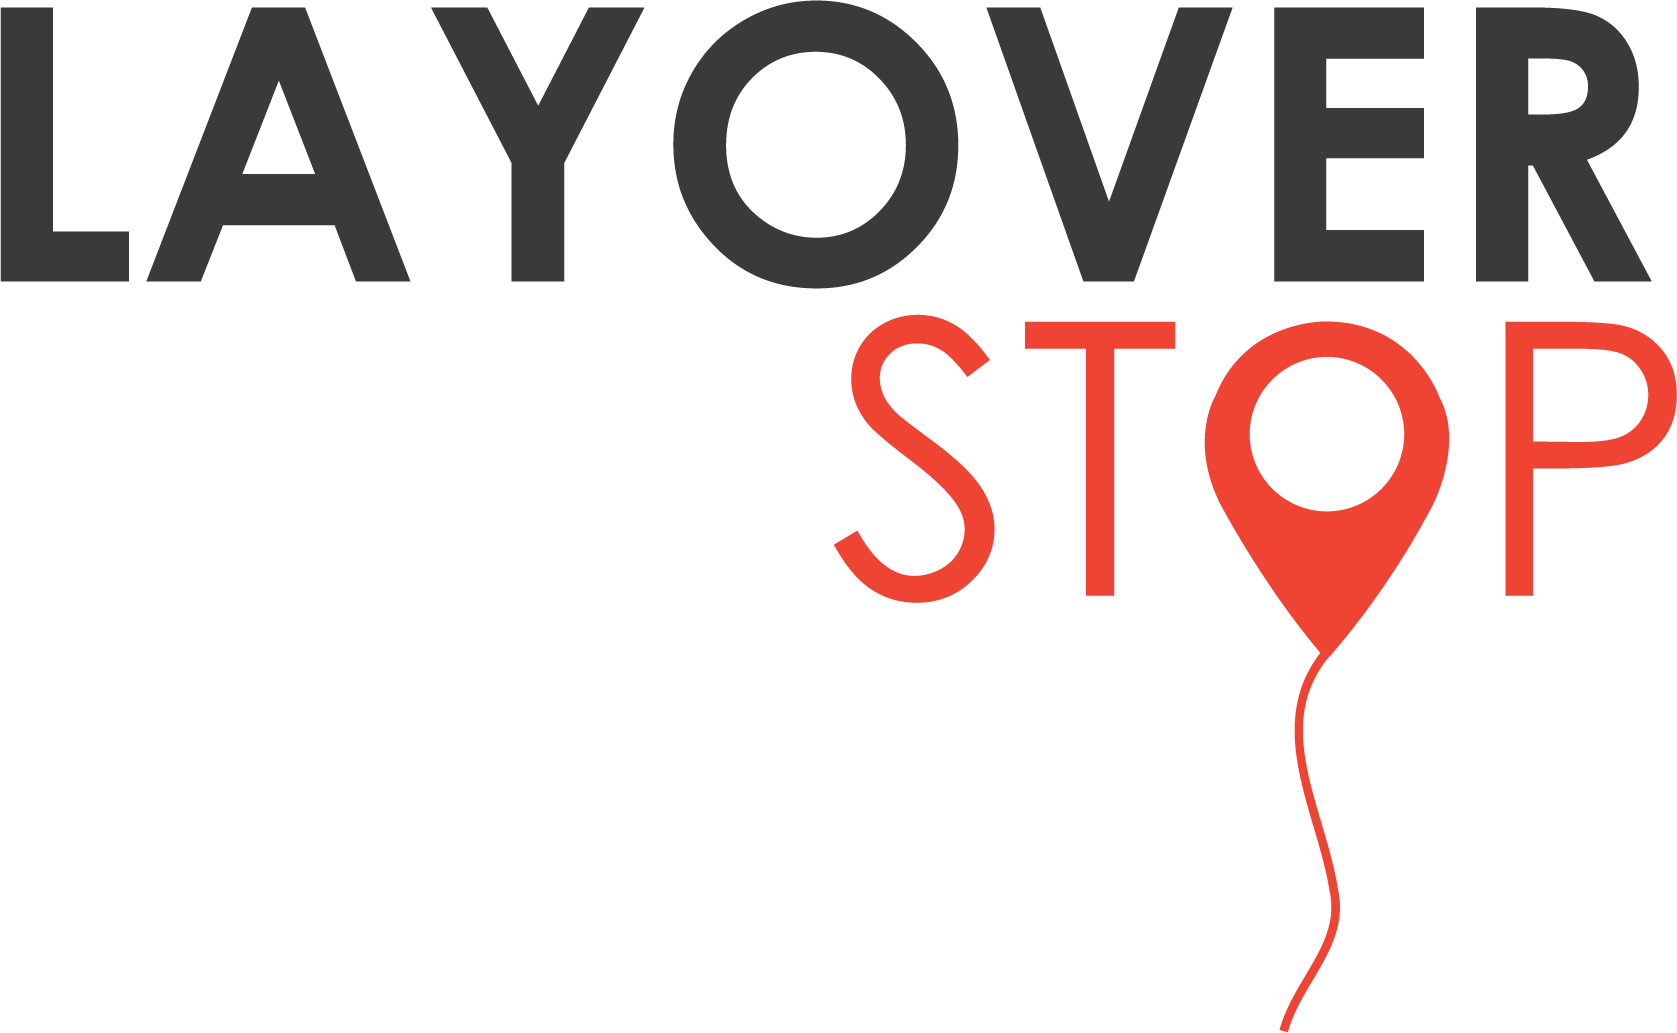 LayoverStop logo